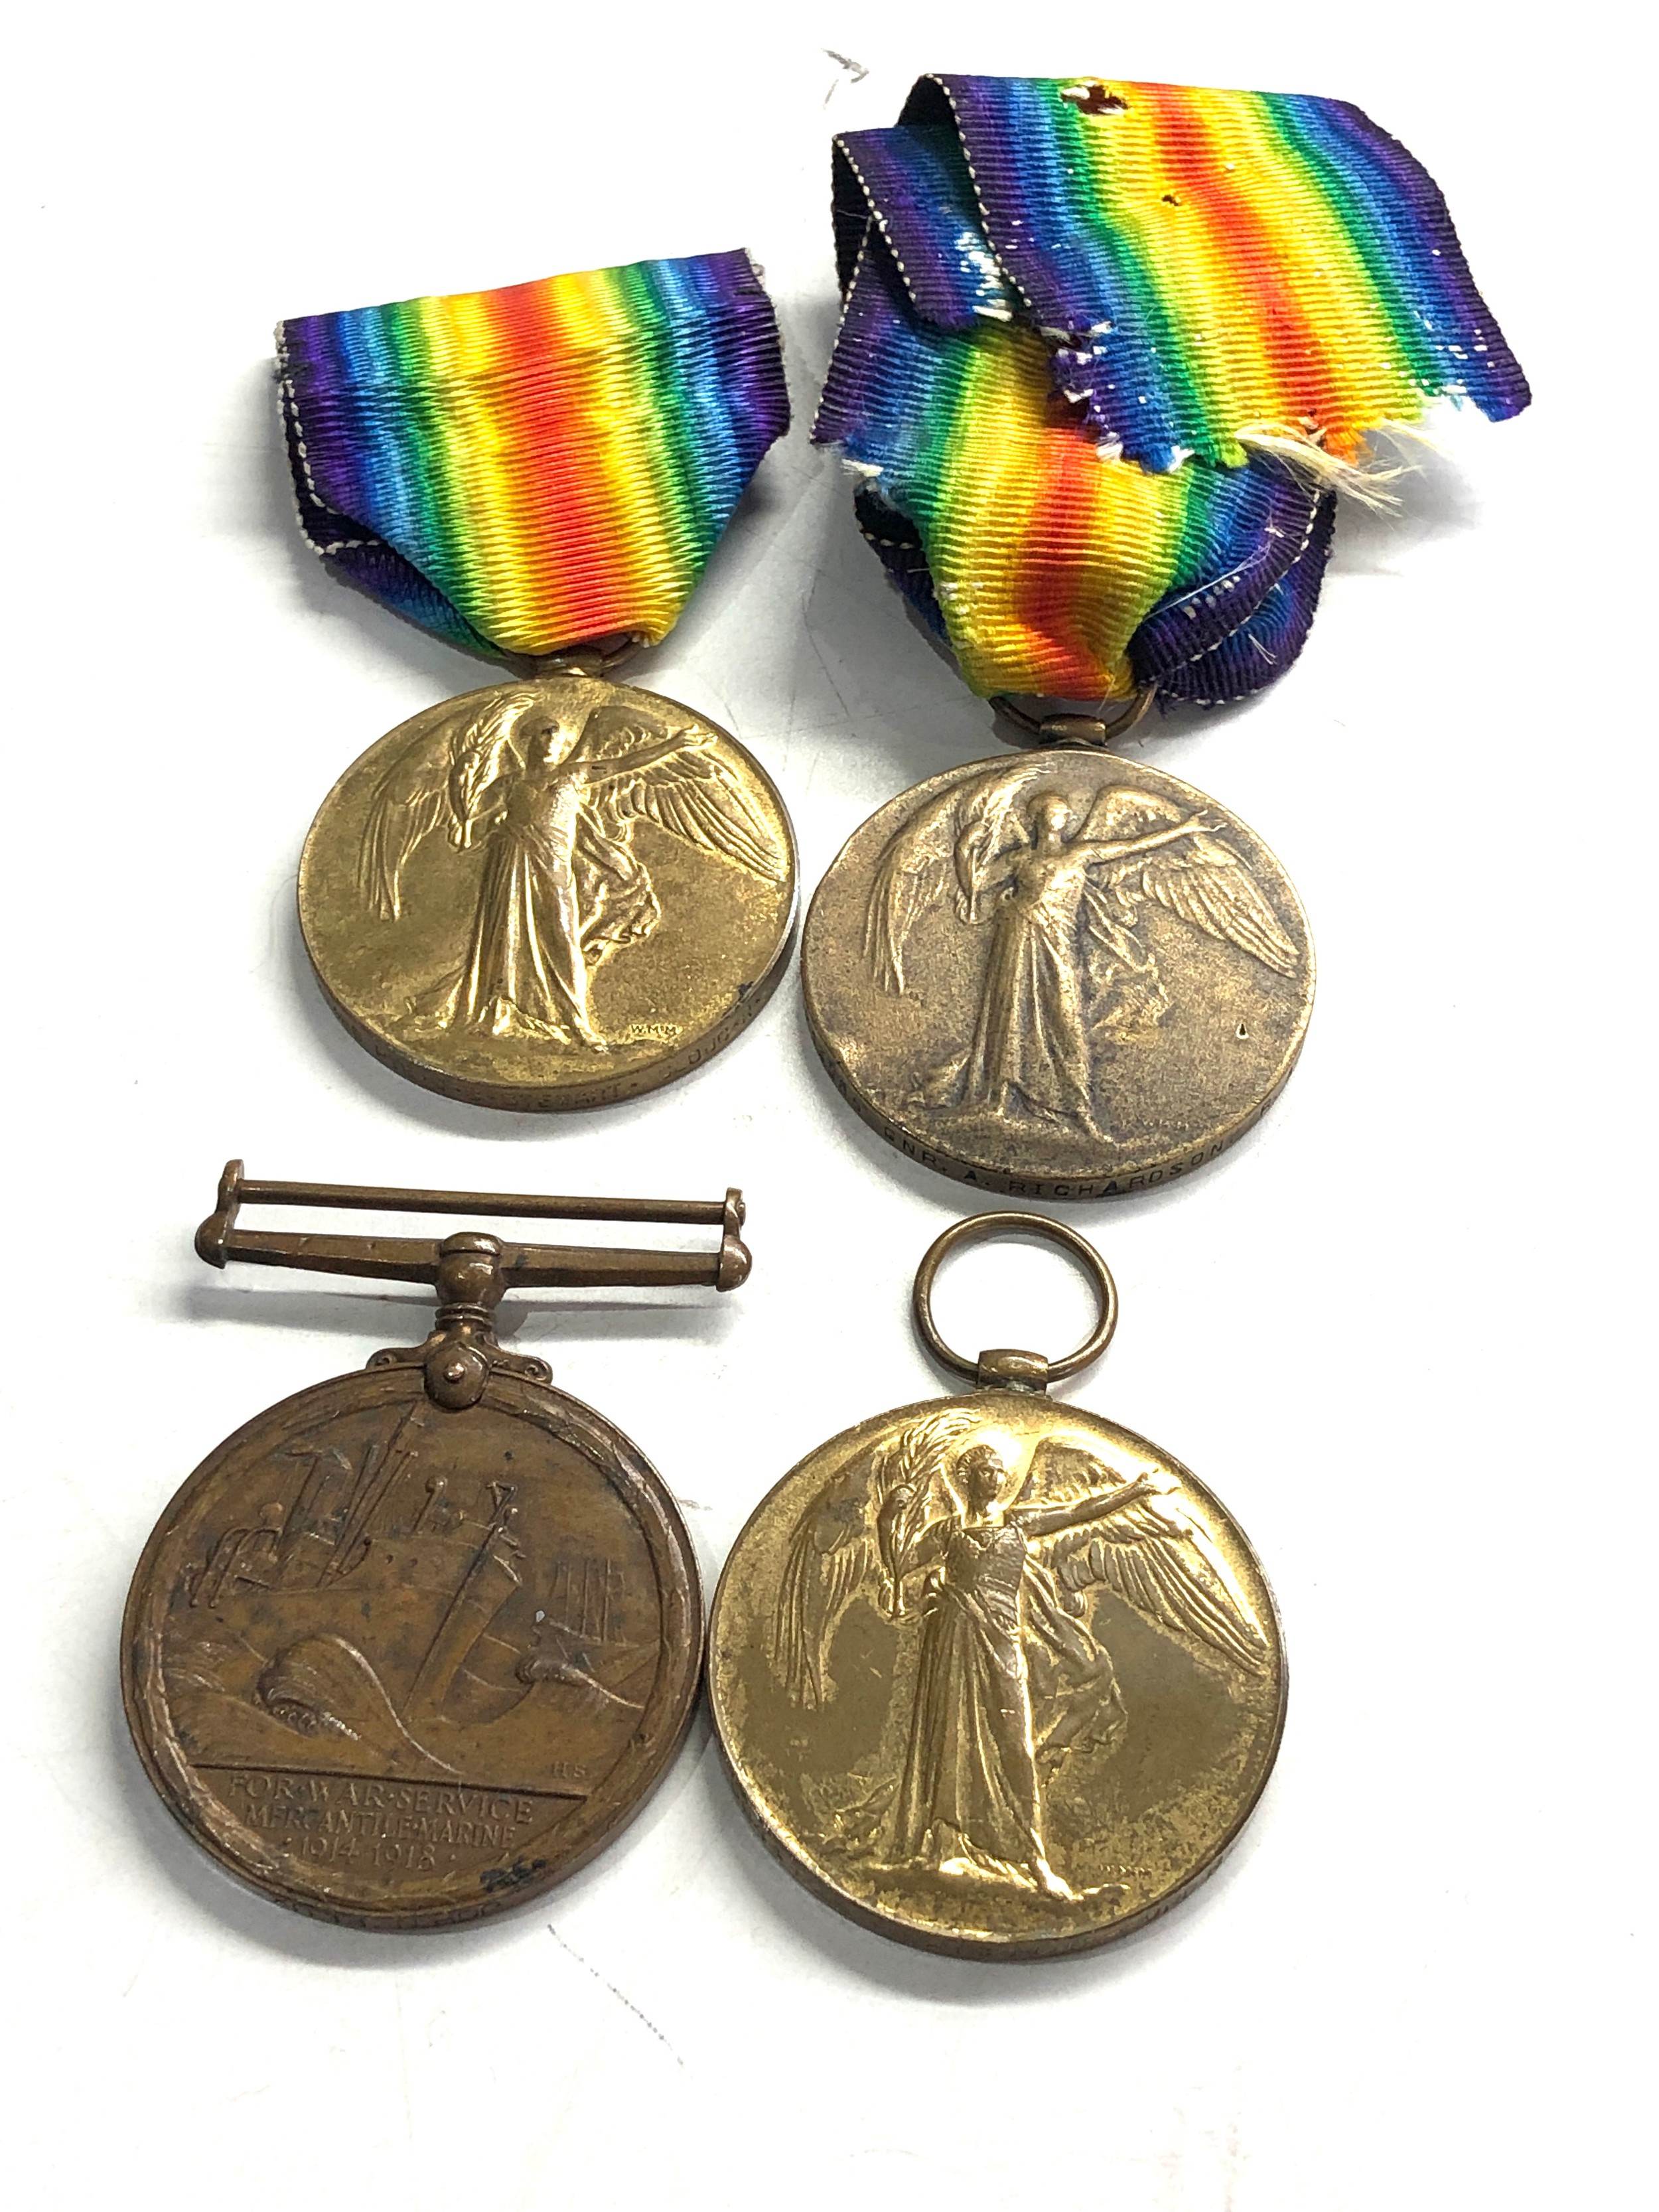 4 ww1 medals inc mercantile marine medal to john flux